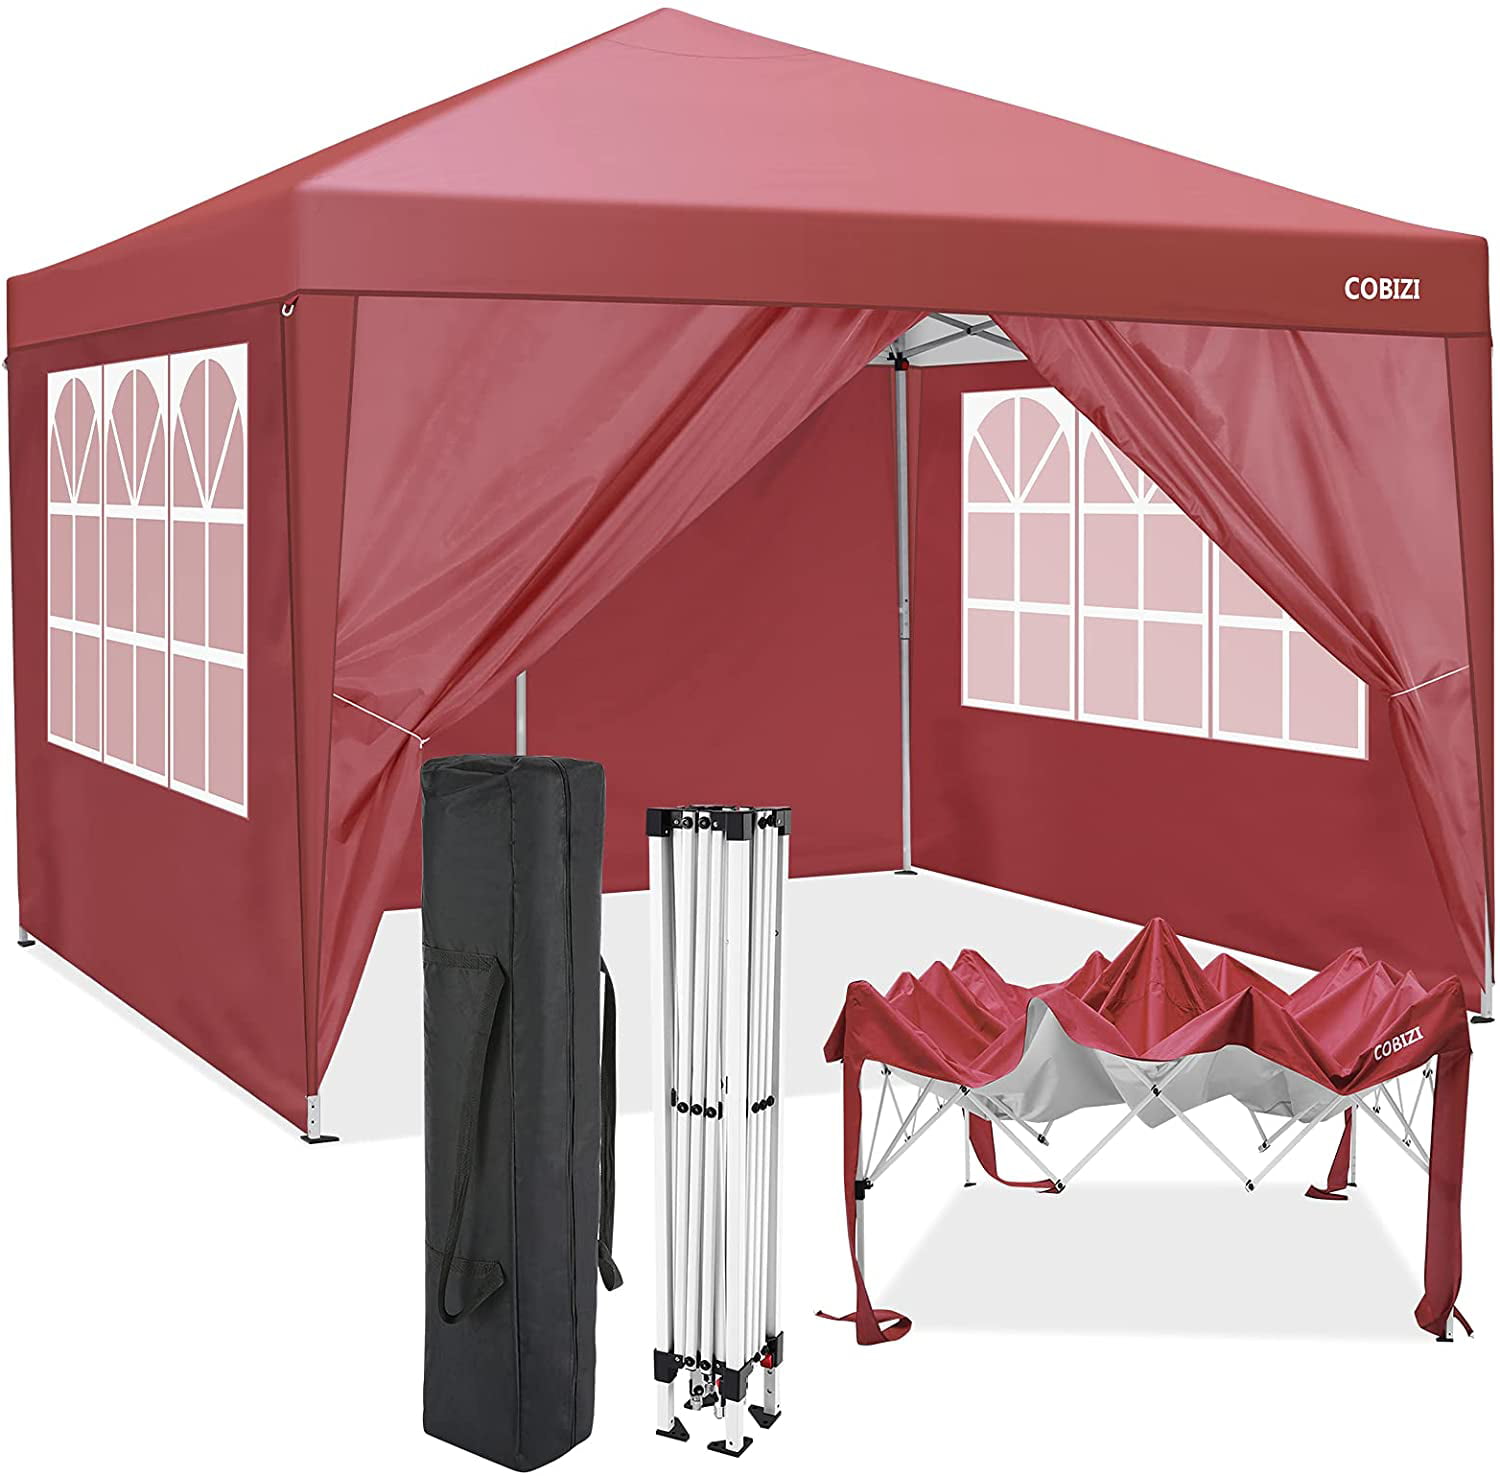 COBIZI Pop-up Canopy 10'x10' Folding Gazebo Oxford Awning Tent 4 Walls Sandbags 